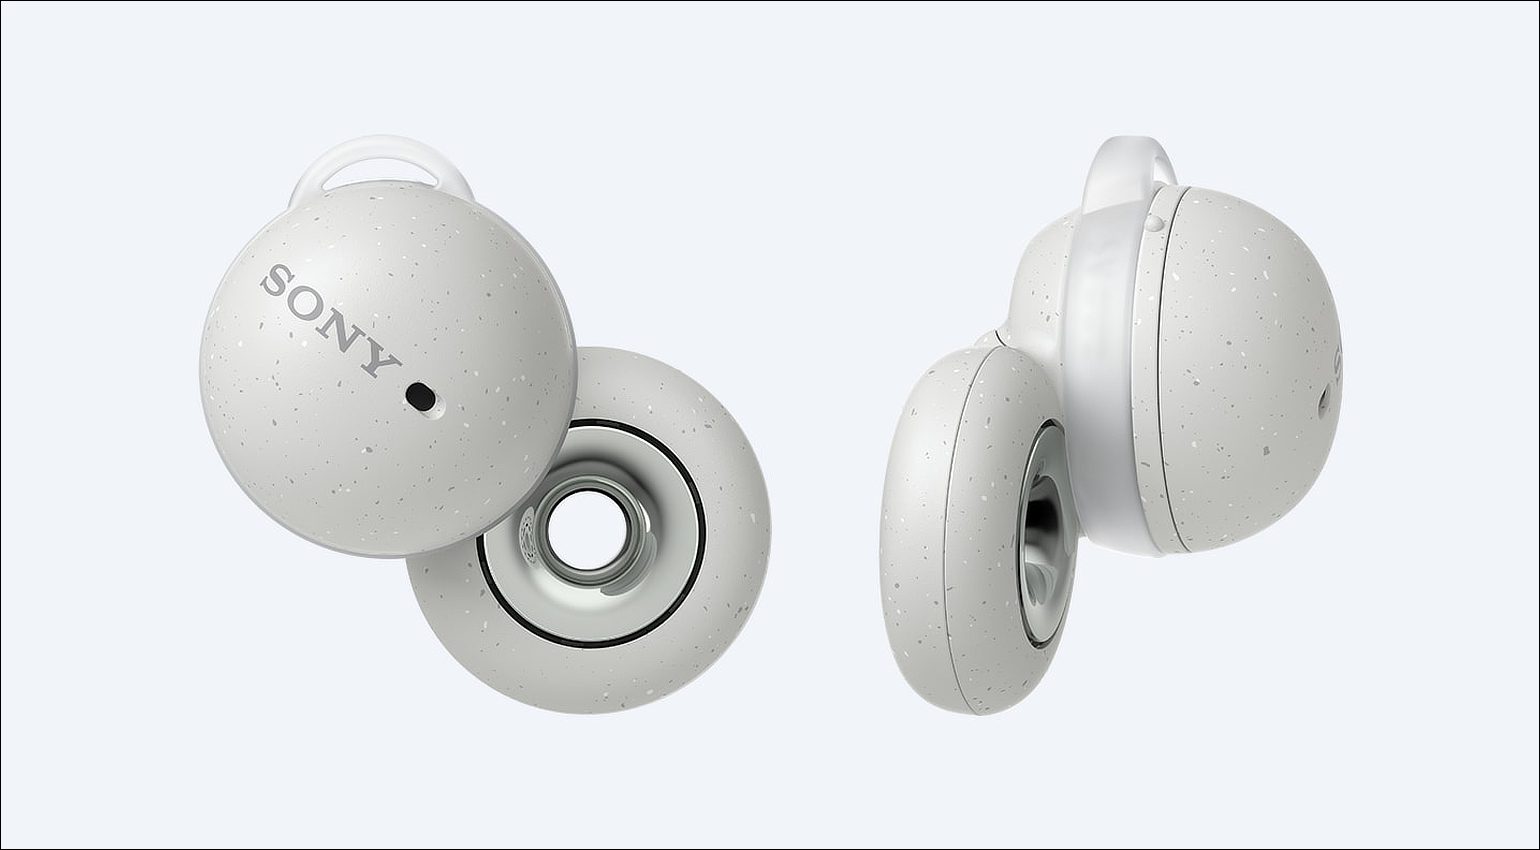 Earbuds galore: Sony LinkBuds und Audio-Technica ATH-CKS50TW